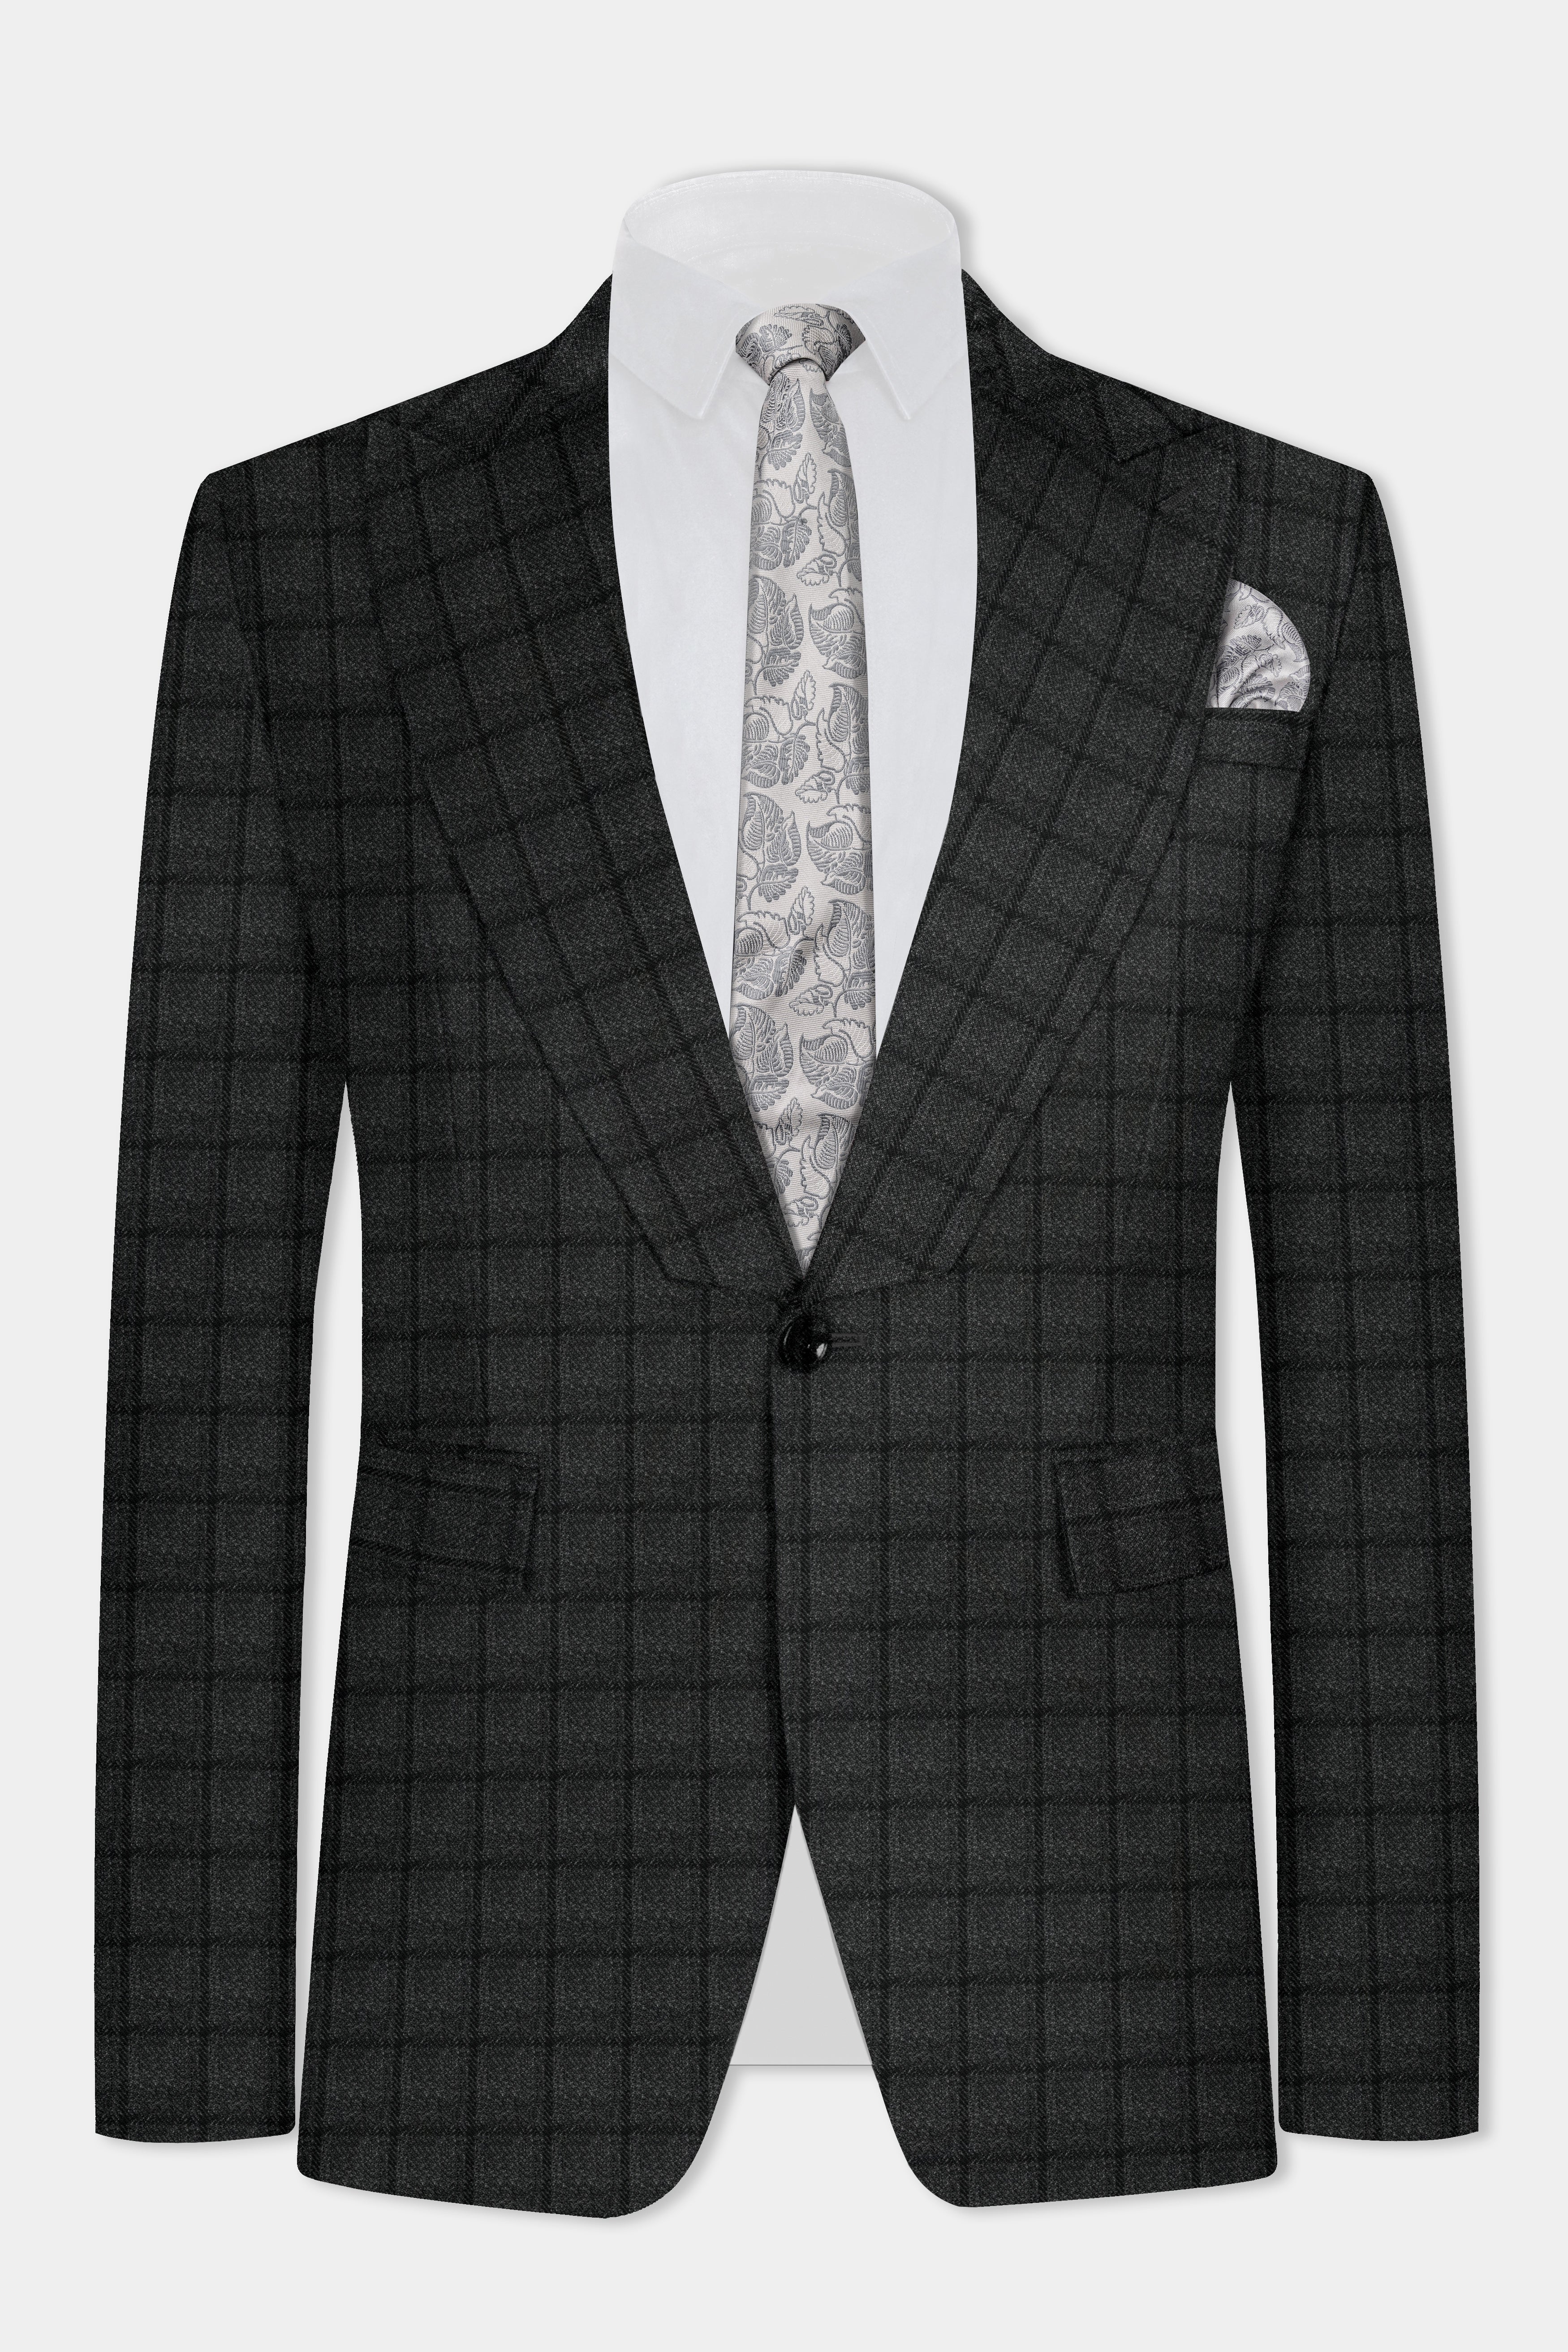 Zeus Gray Plaid Tweed Suit